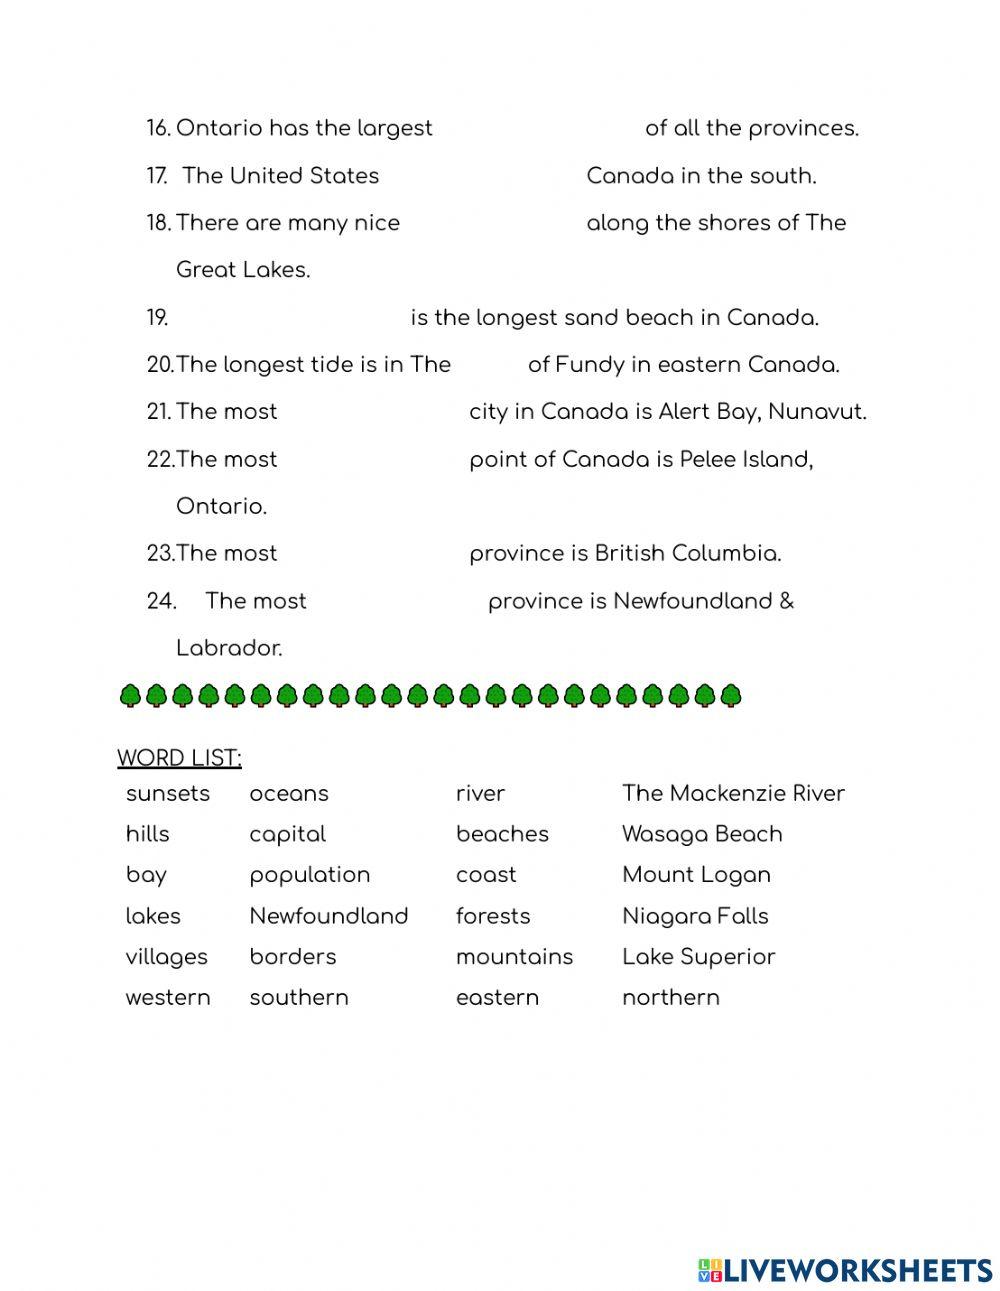 CLB 4: Canada Geography